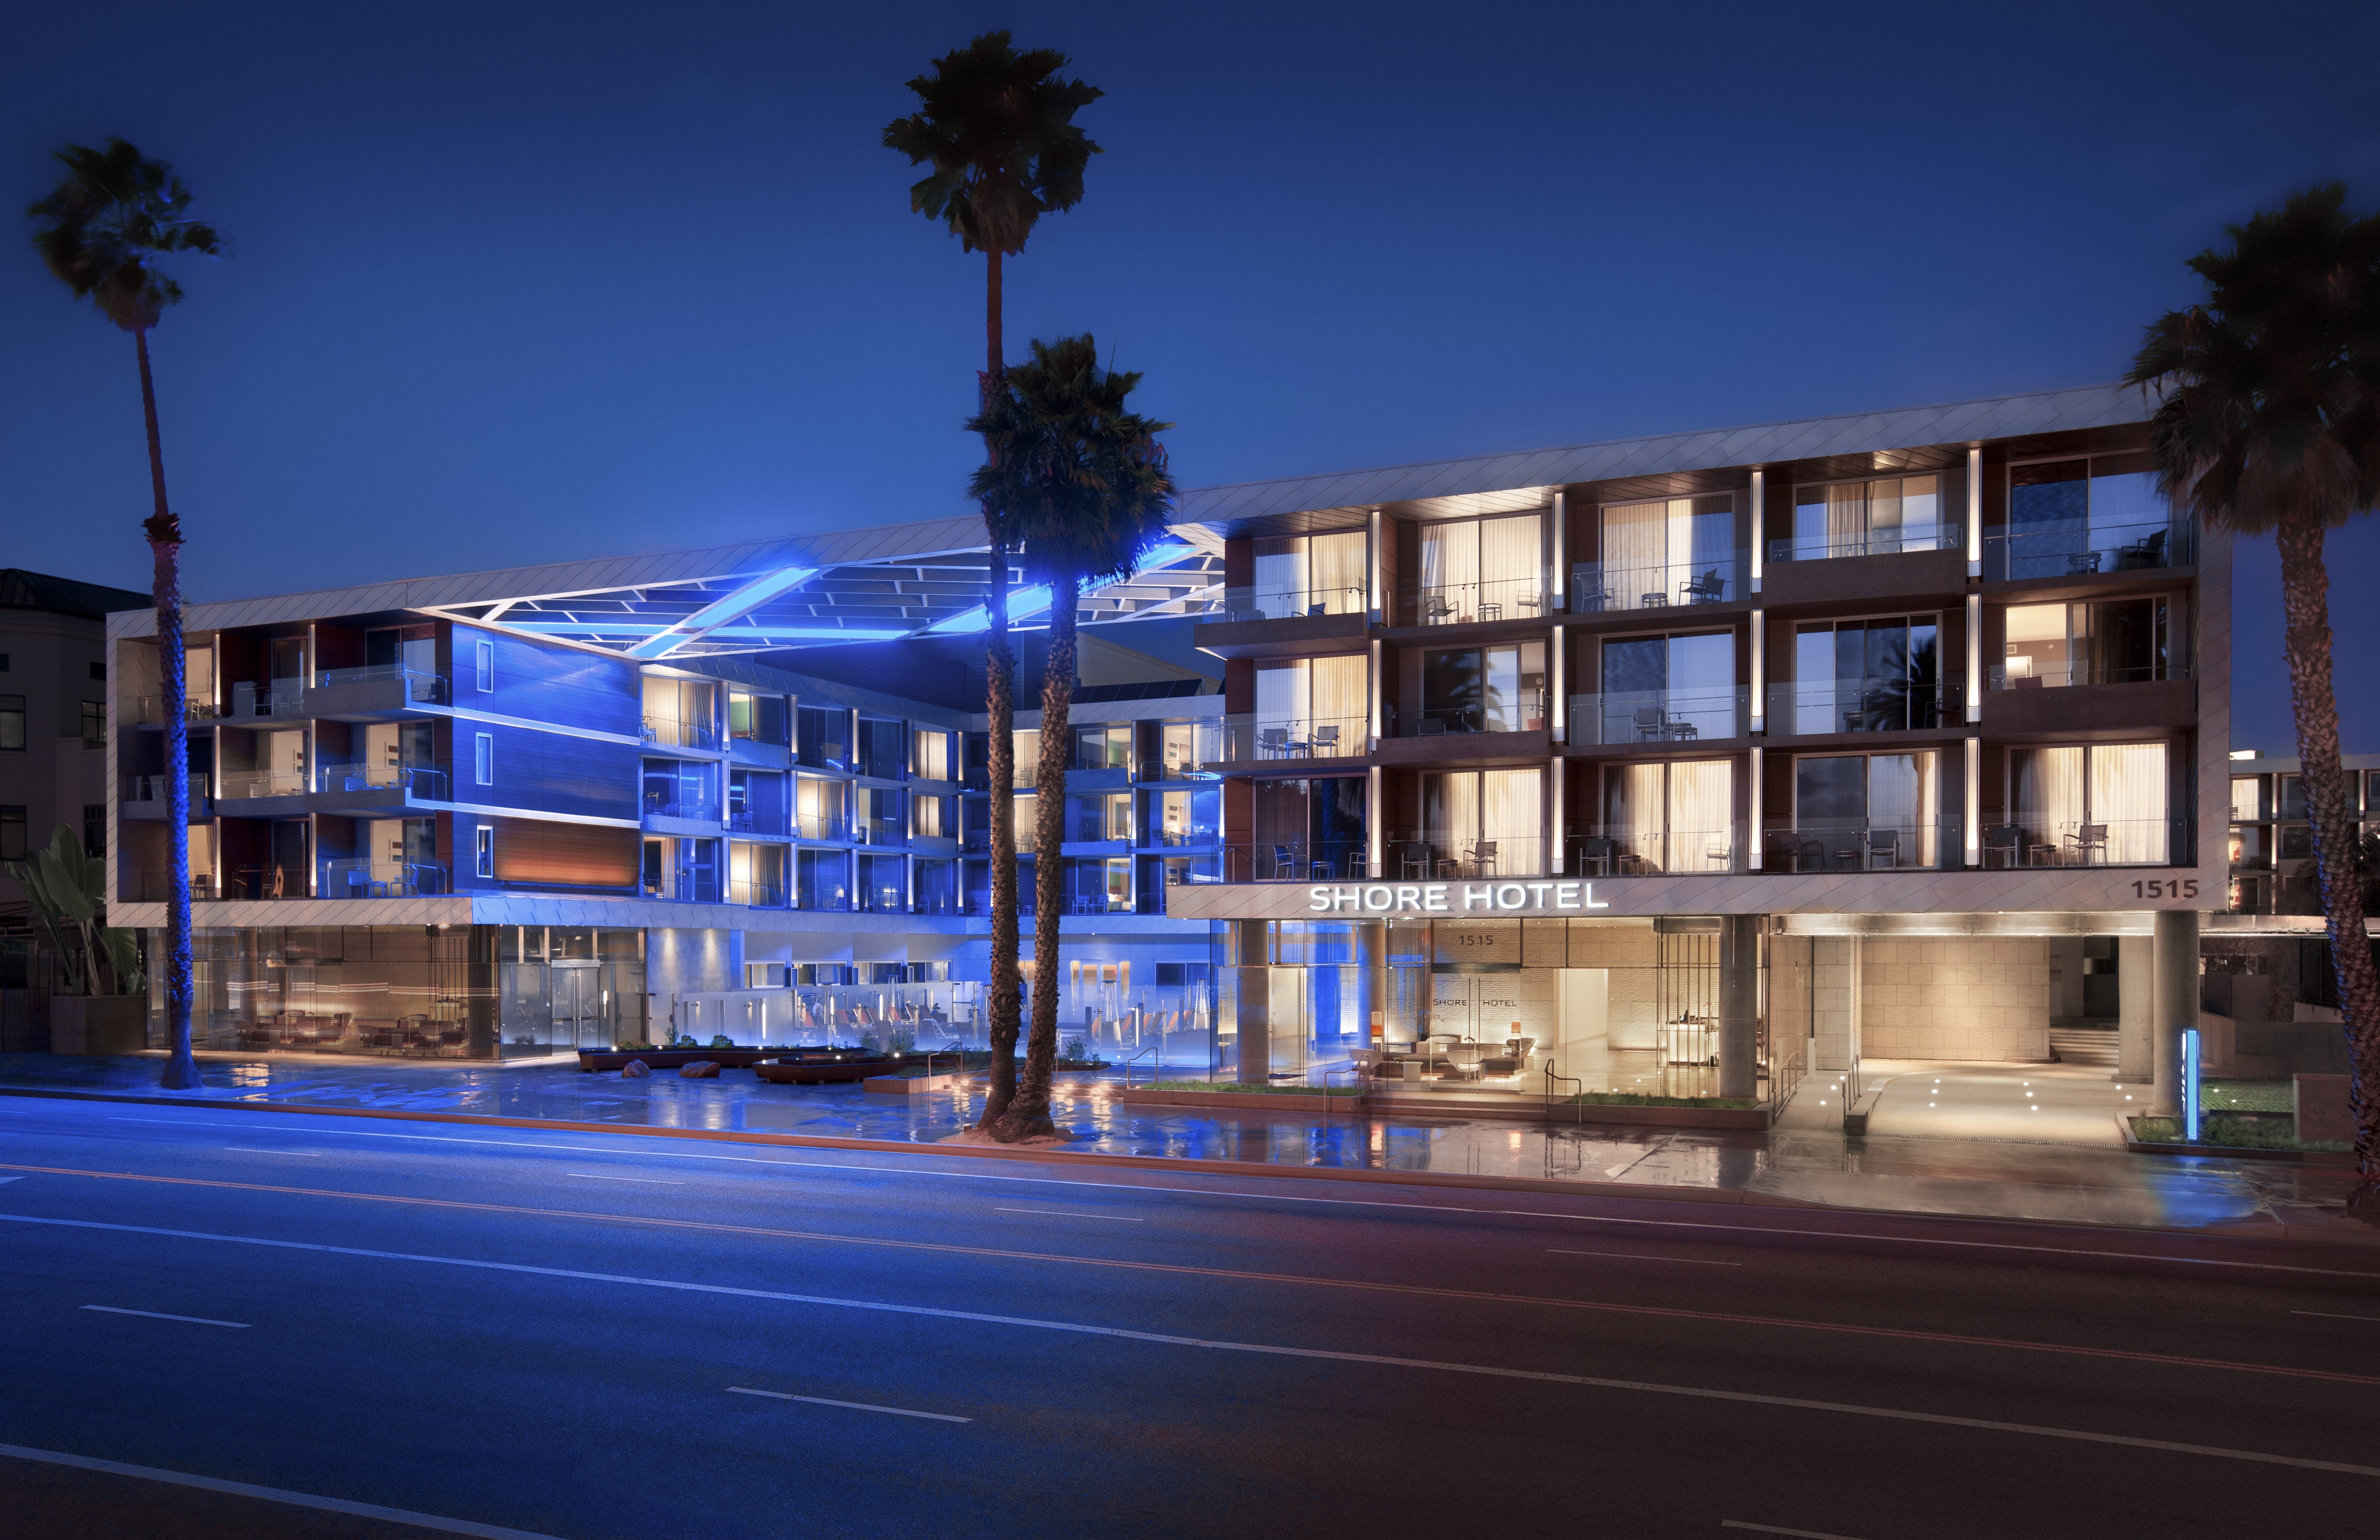 Photo of Shore Hotel, Santa Monica, CA